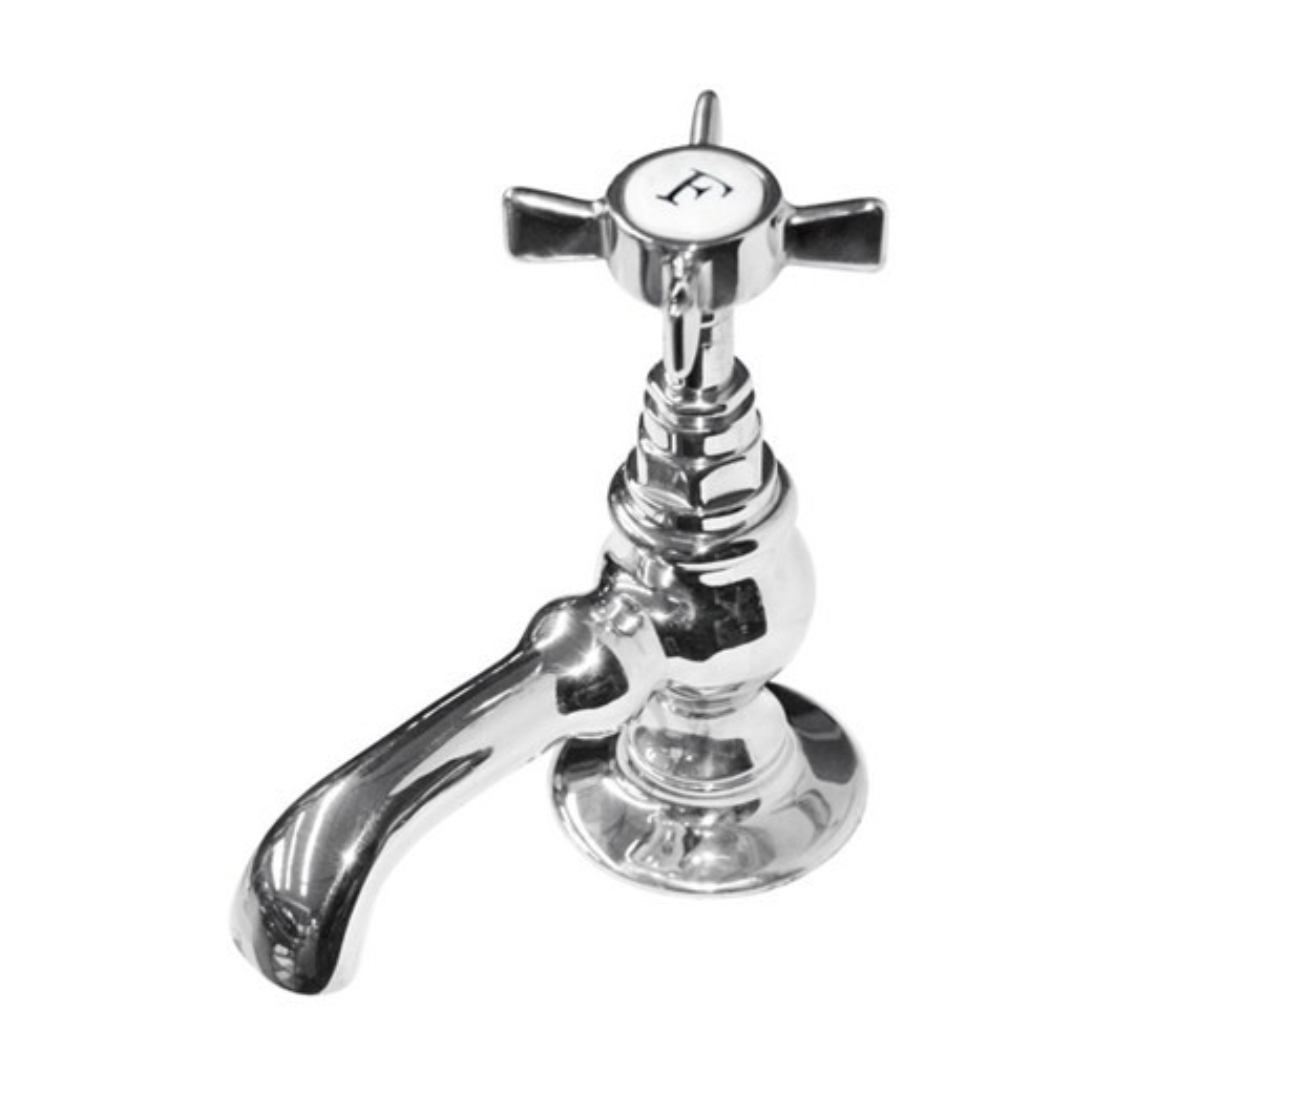 Balneo Toscia Vintage style low spout sink taps